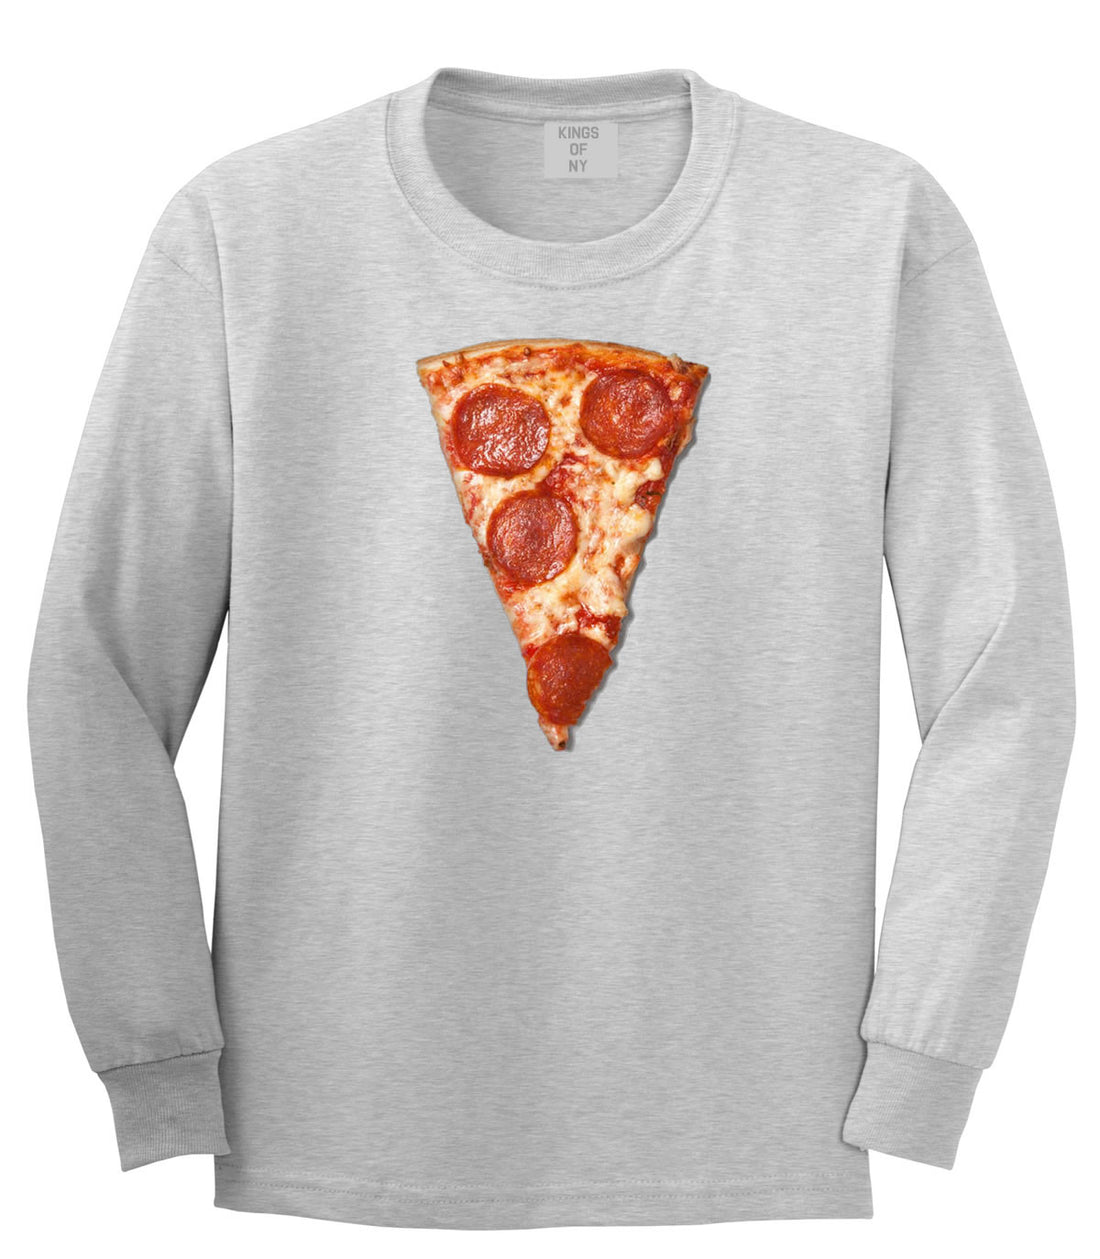 Real Pizza with Pepperoni Emoji Meme Long Sleeve T-Shirt